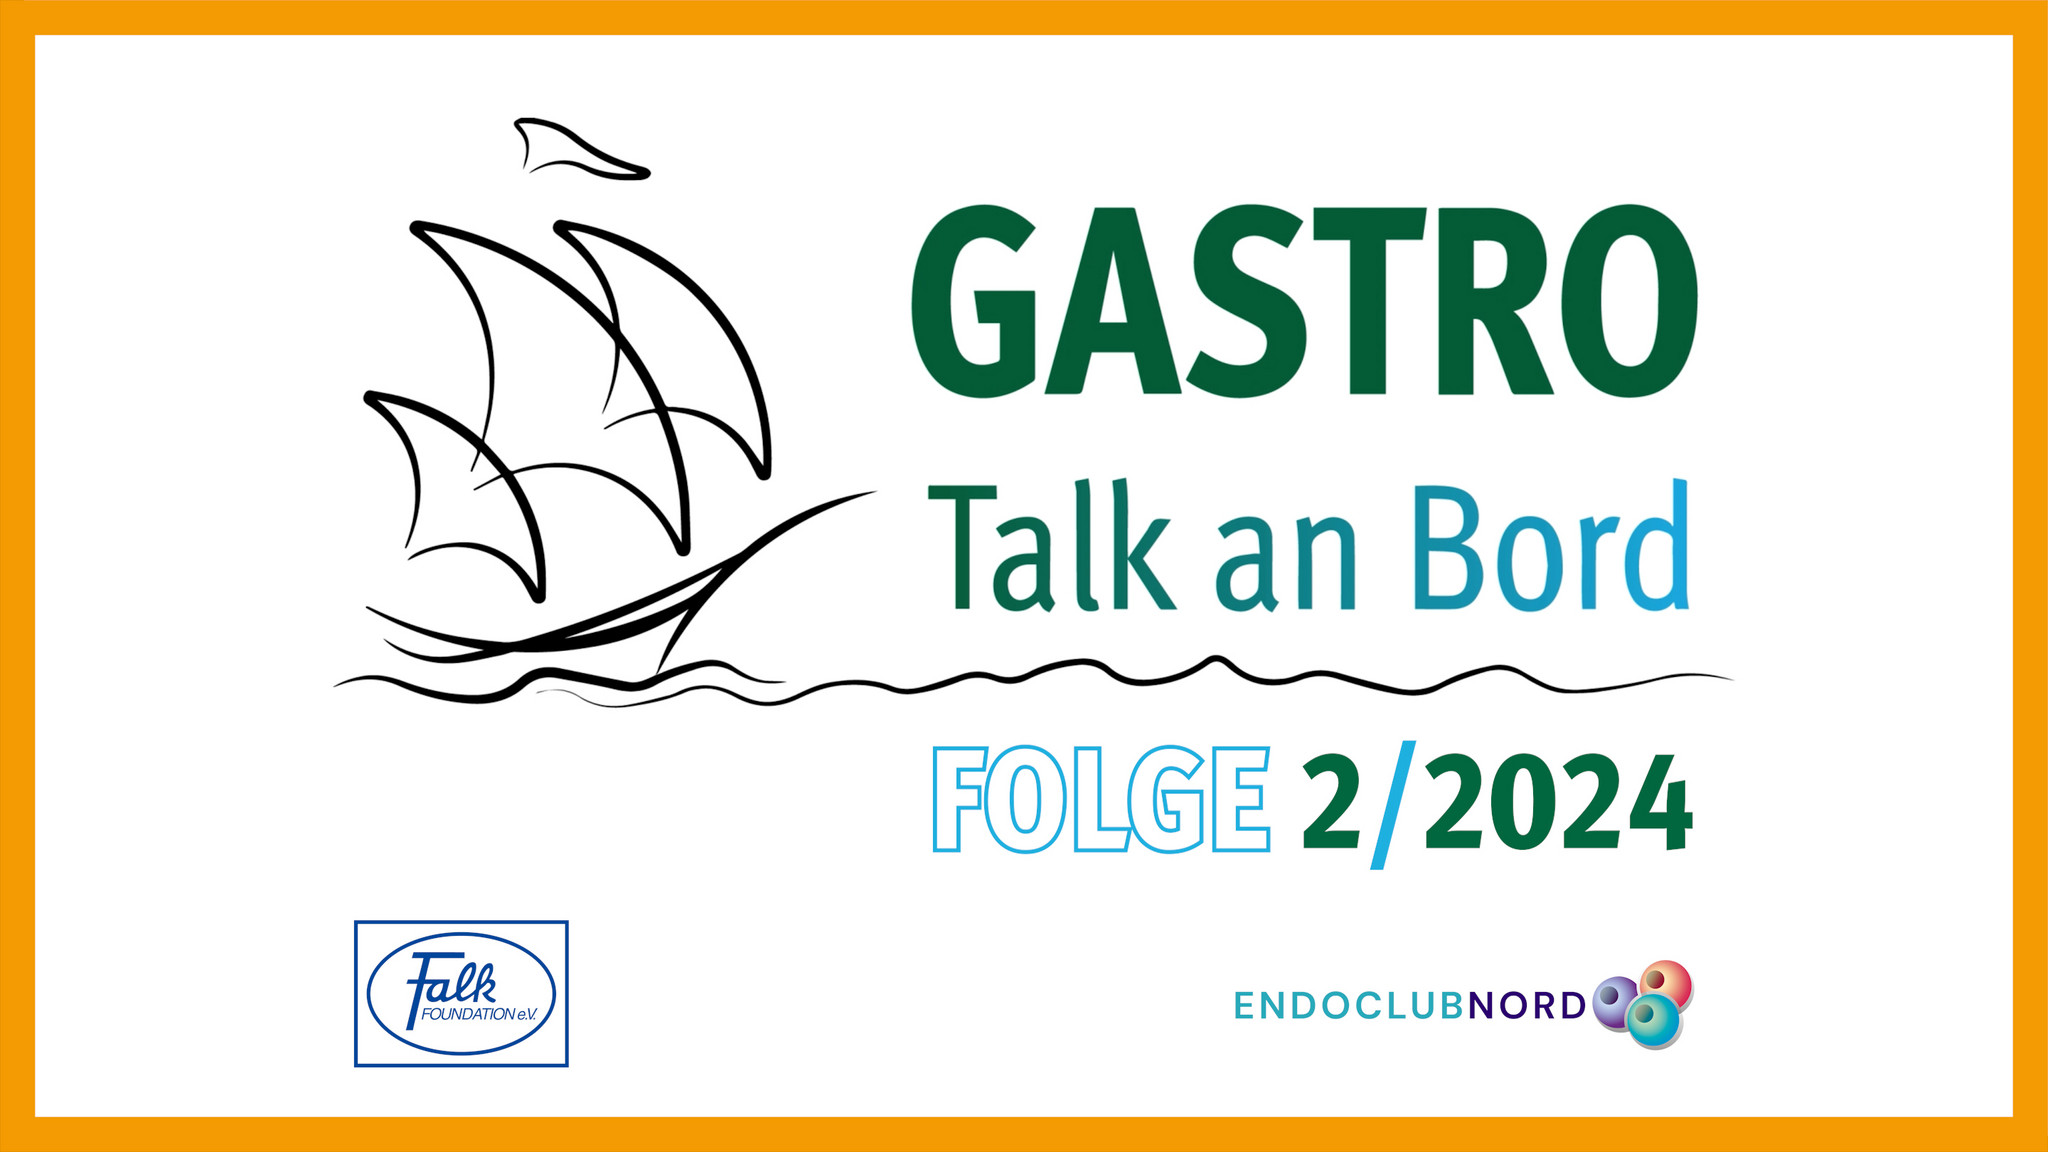 Gastro_Talk_an_Bord_Folge2-24